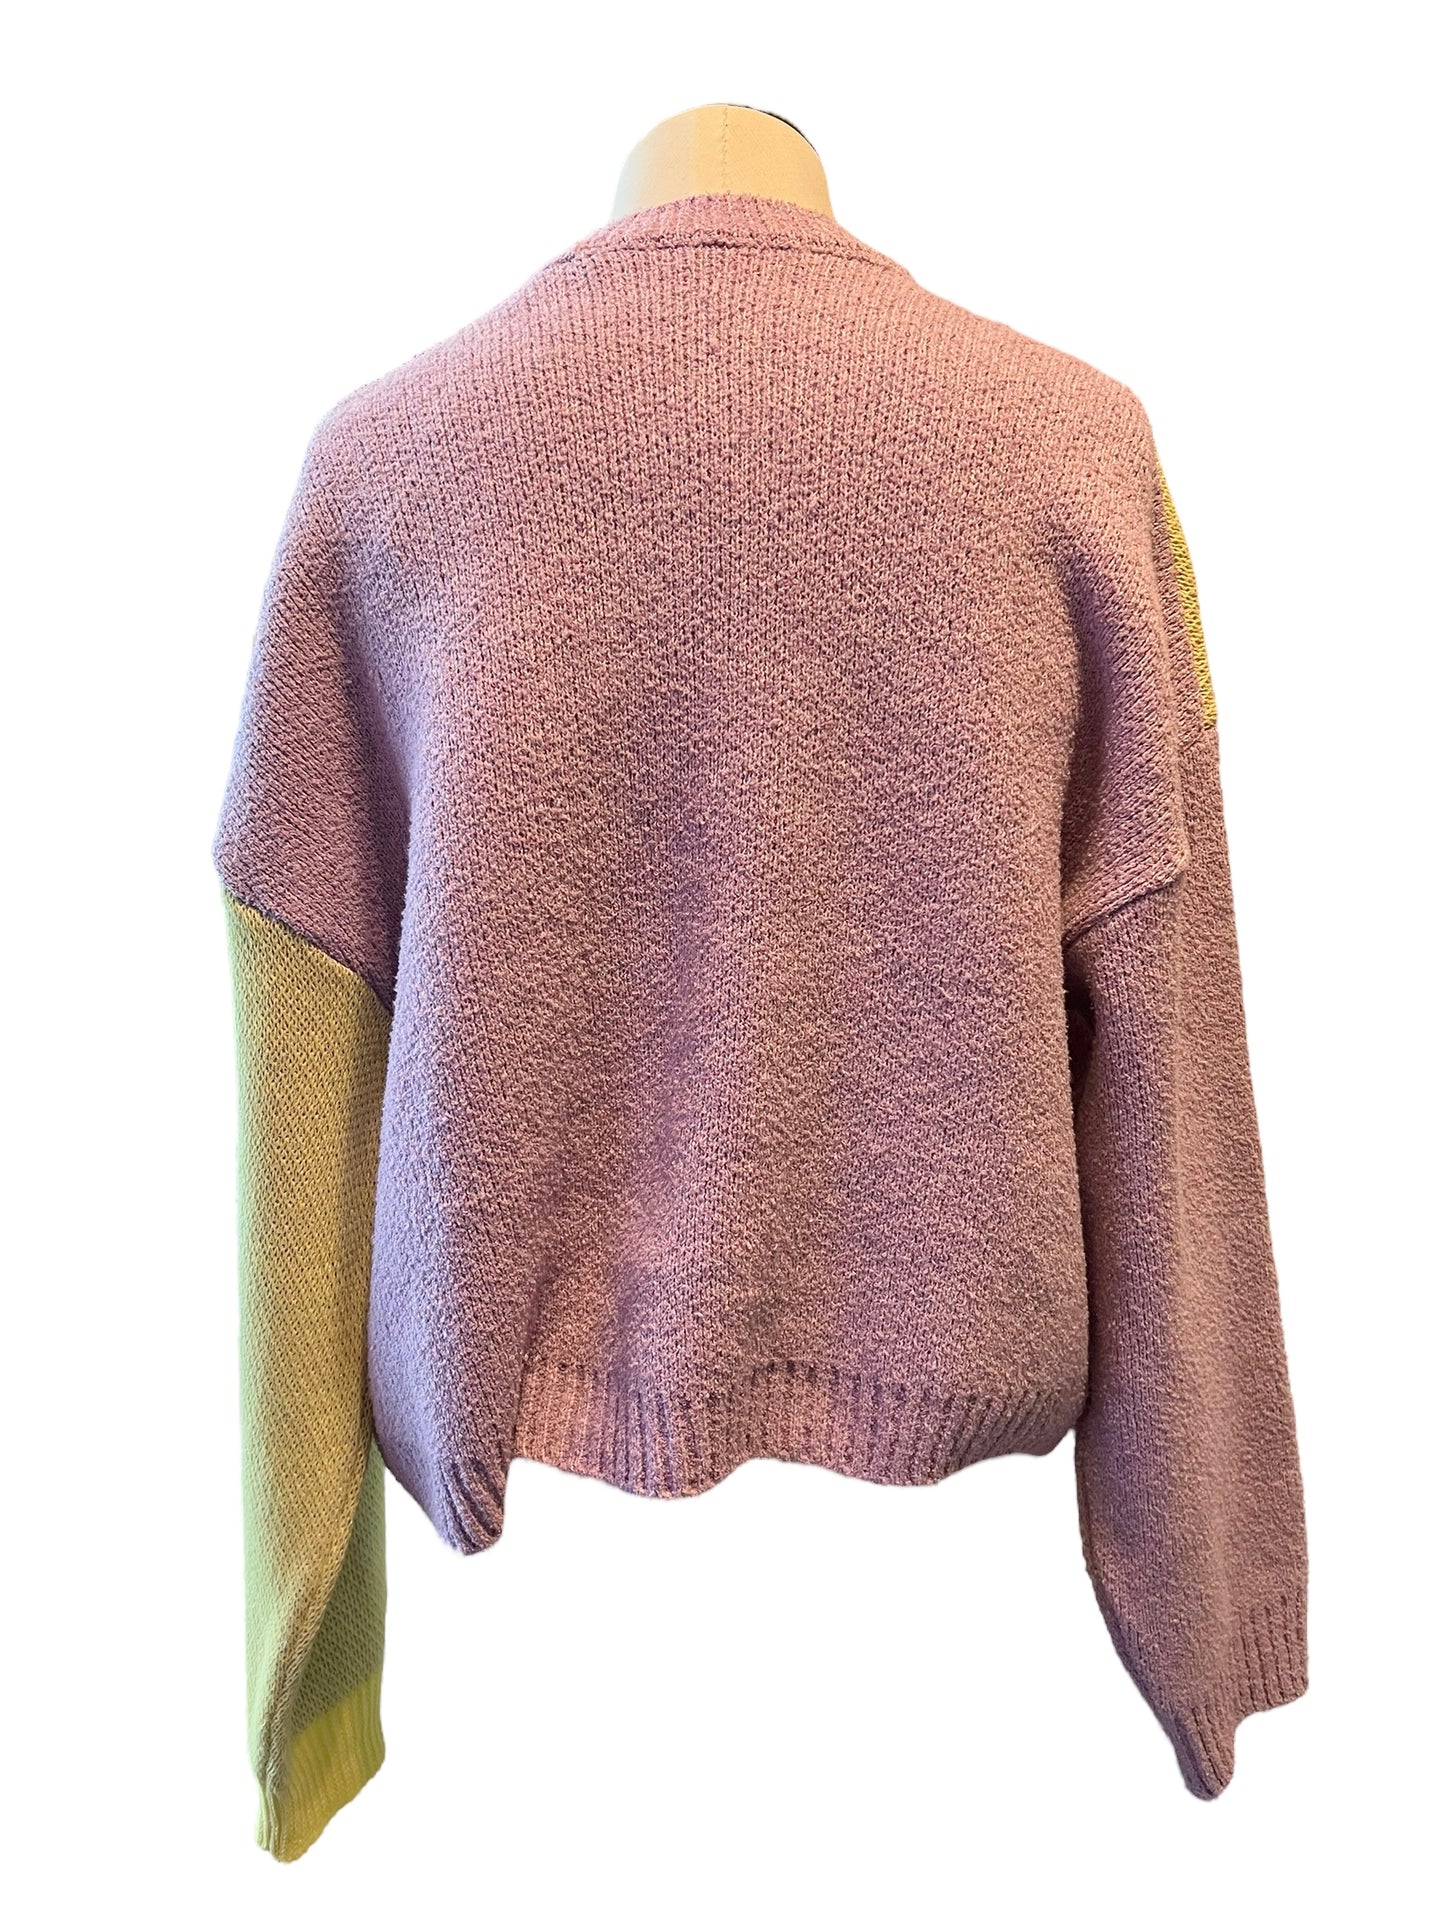 Zara Size M Retro Purple & Yellow Flower Sweater